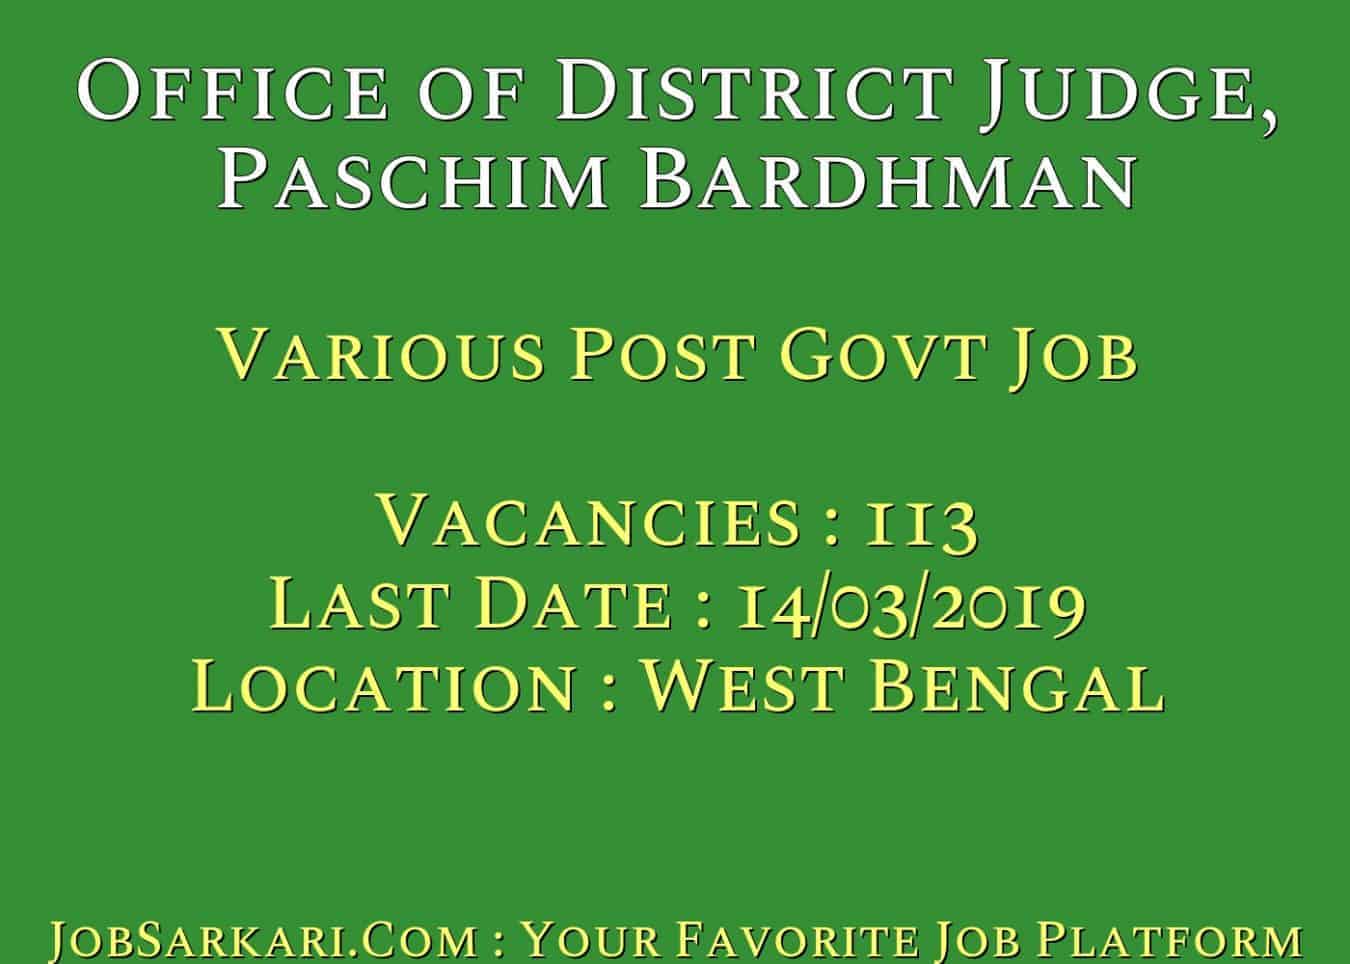 Office of District Judge, Paschim Bardhman Recruitment 2019 For Various Post Govt Job